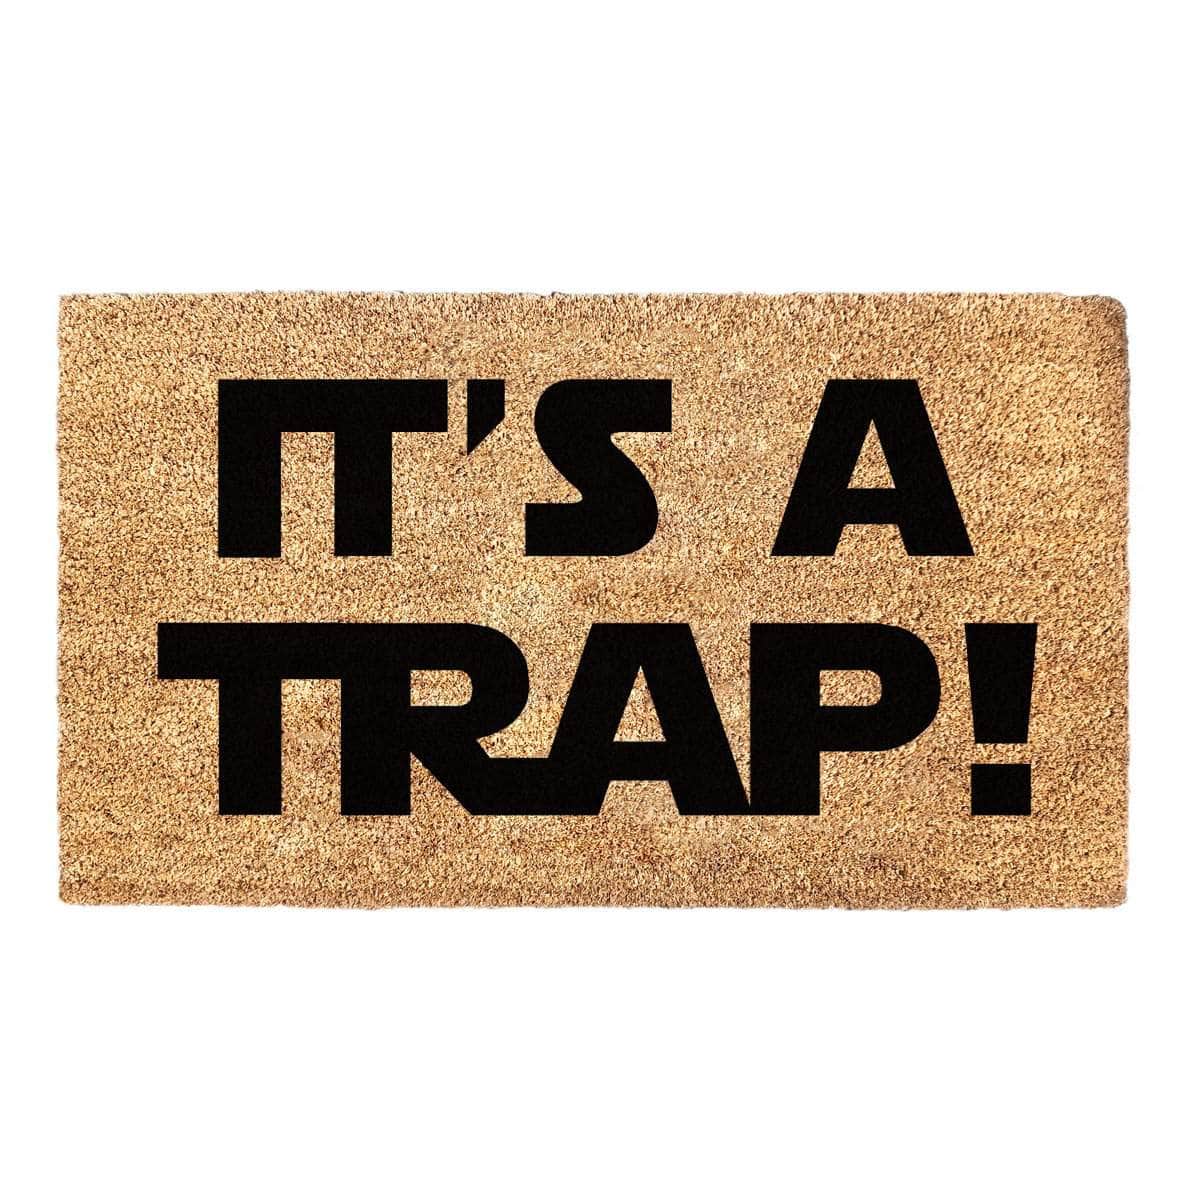 Star Wars It's a Trap! - Admiral Ackbar Quote Doormat